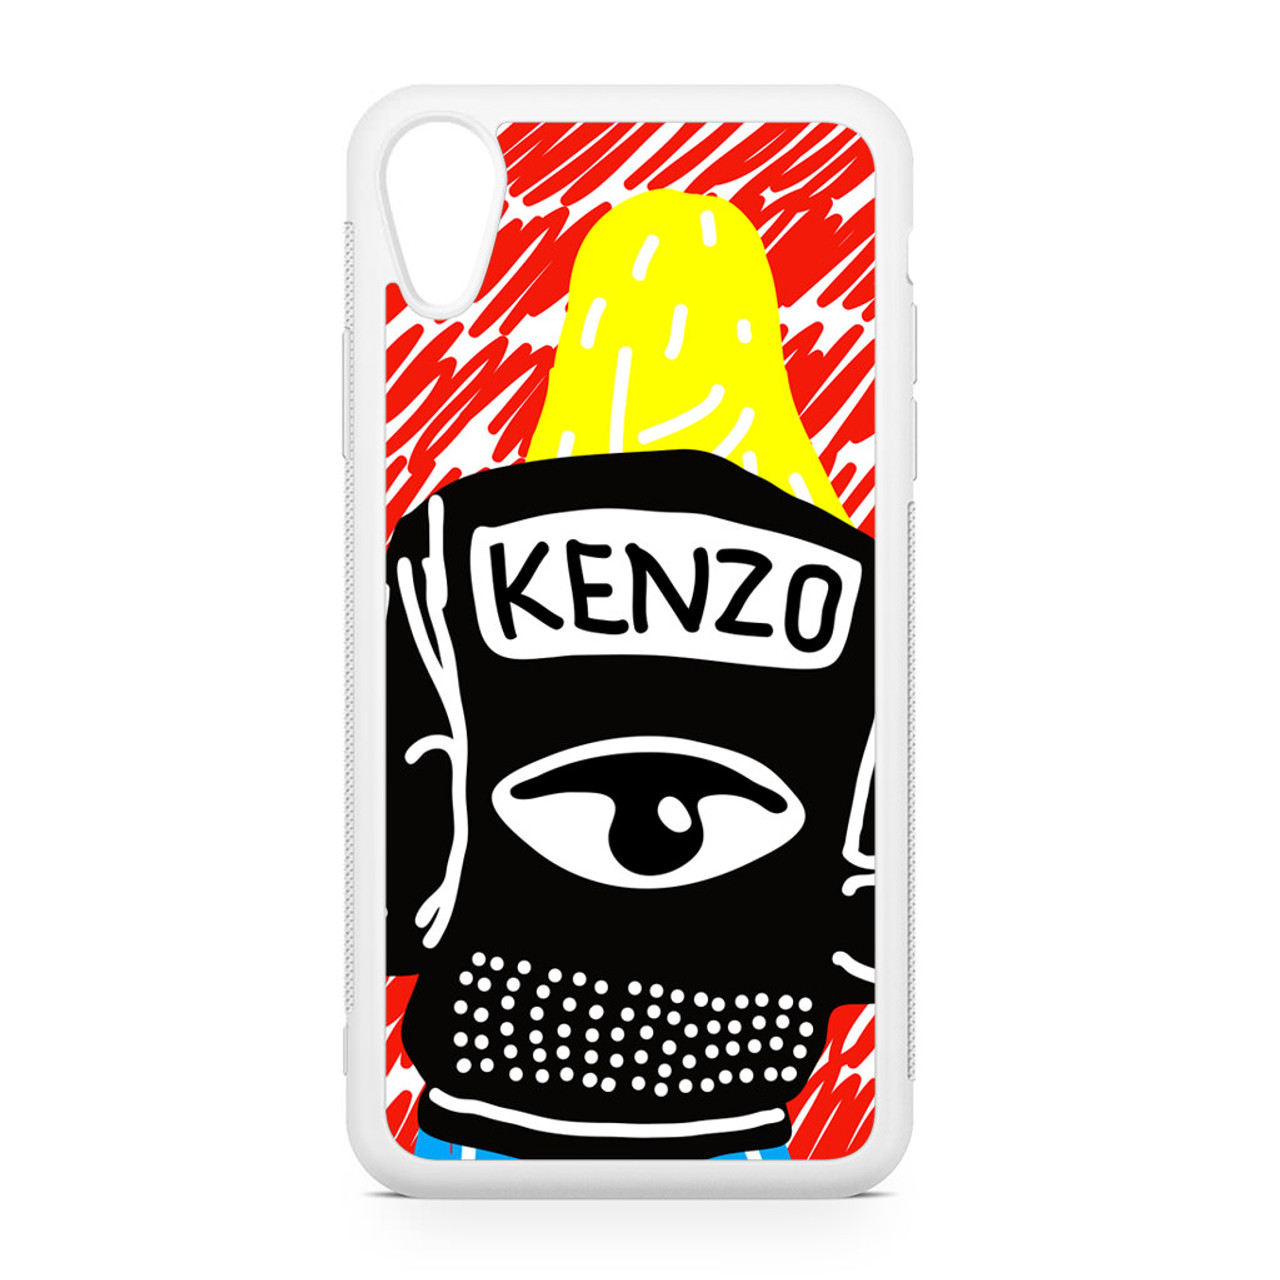 kenzo iphone xr case